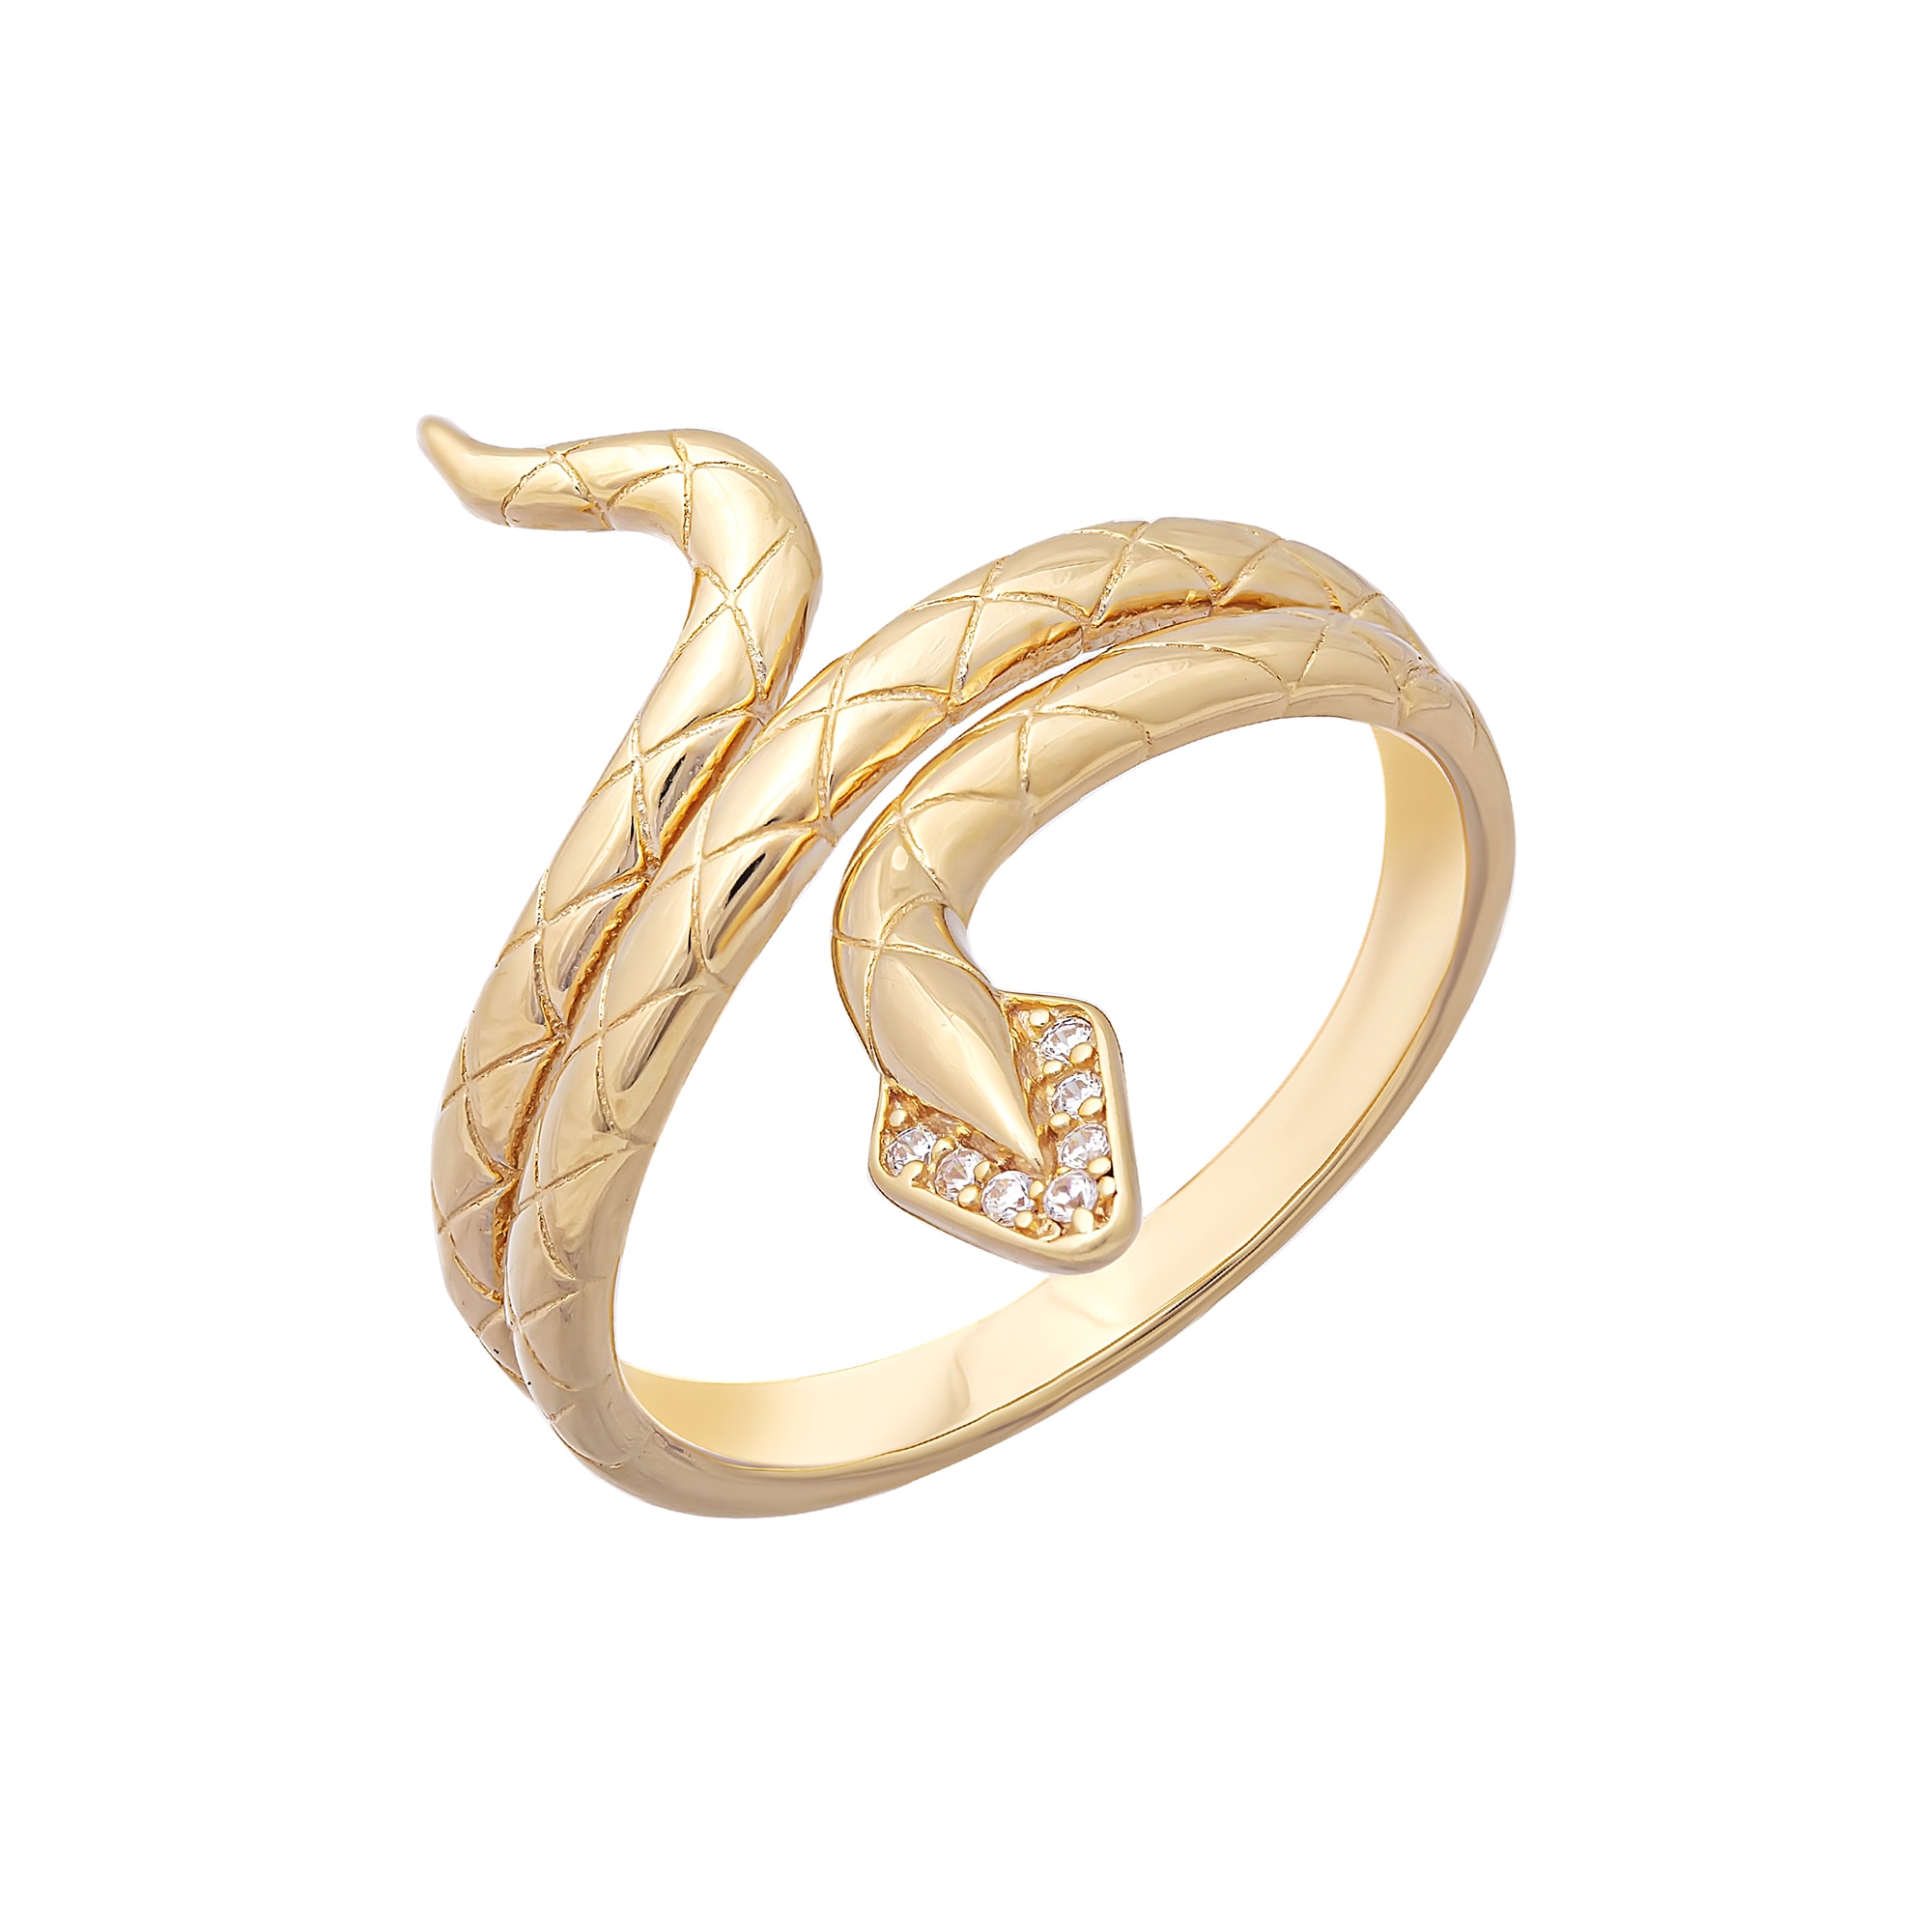 CAÏ Fingerring »925 Silber vergoldet Schlange mit Zirkonia«